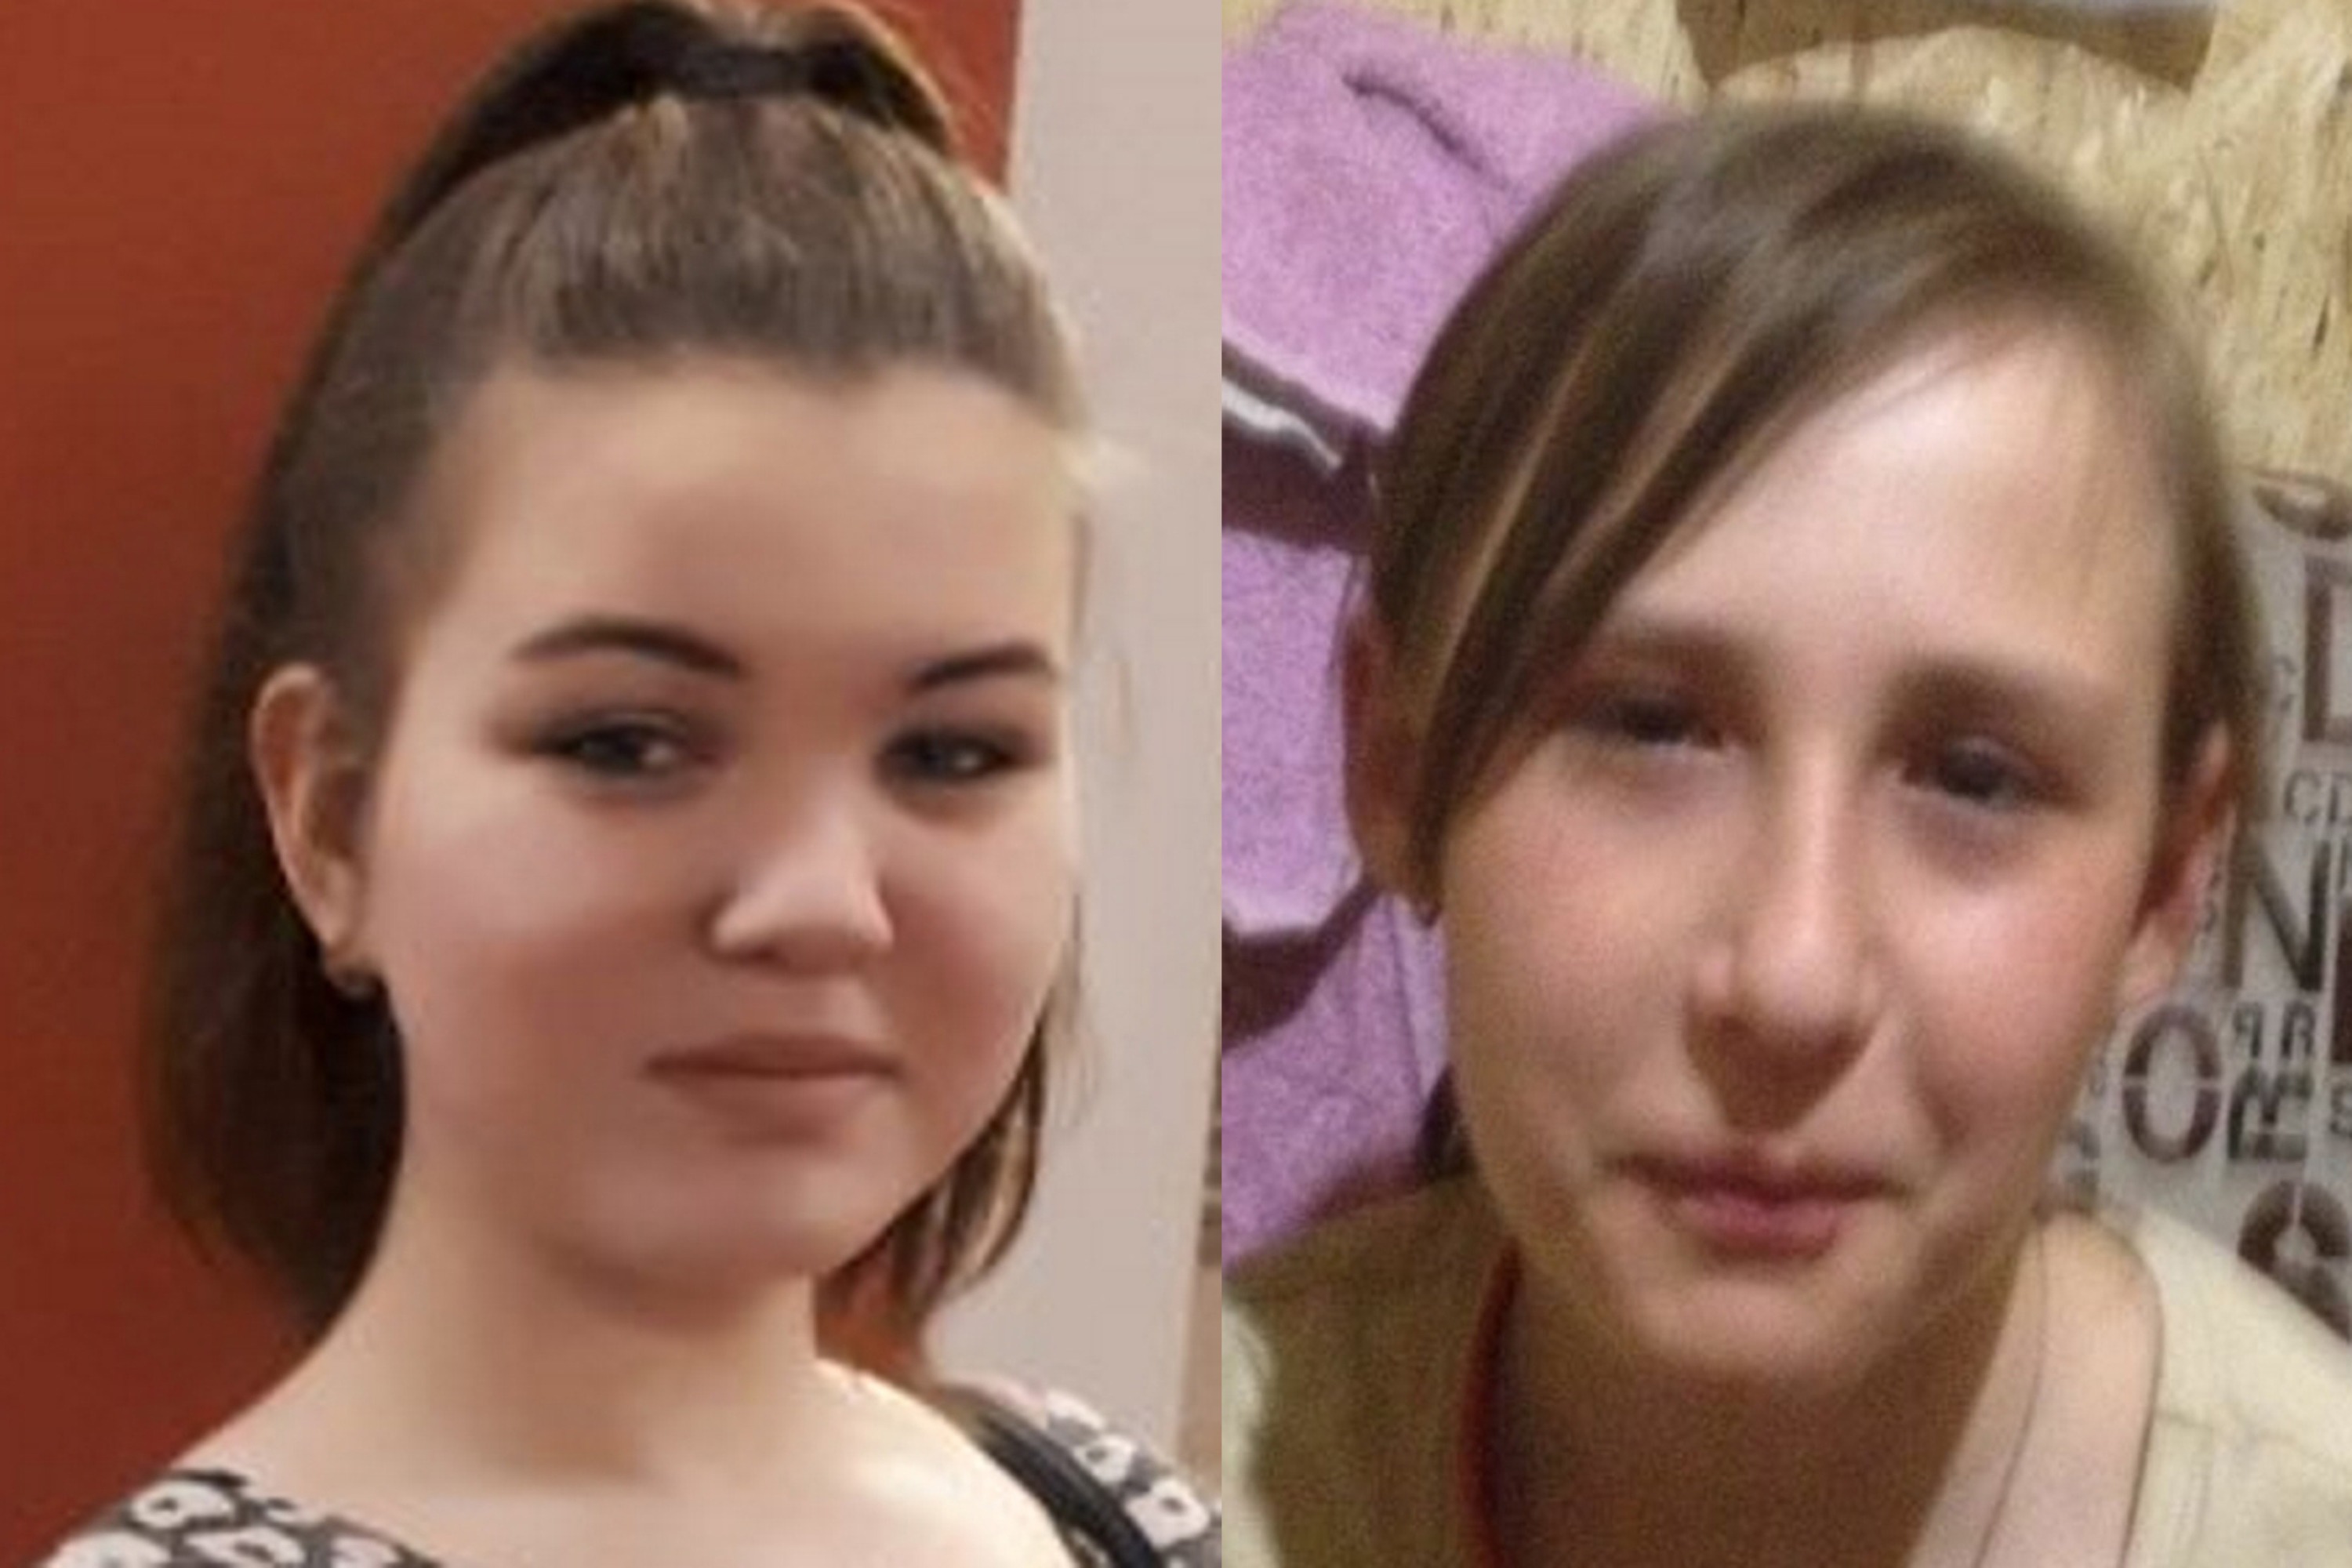 Пропавшие 2 девушки. Пропавшие девушки в Новосибирске. Случай в Новосибирске с девушкой волосы. Девочки 2 почдки у лица.